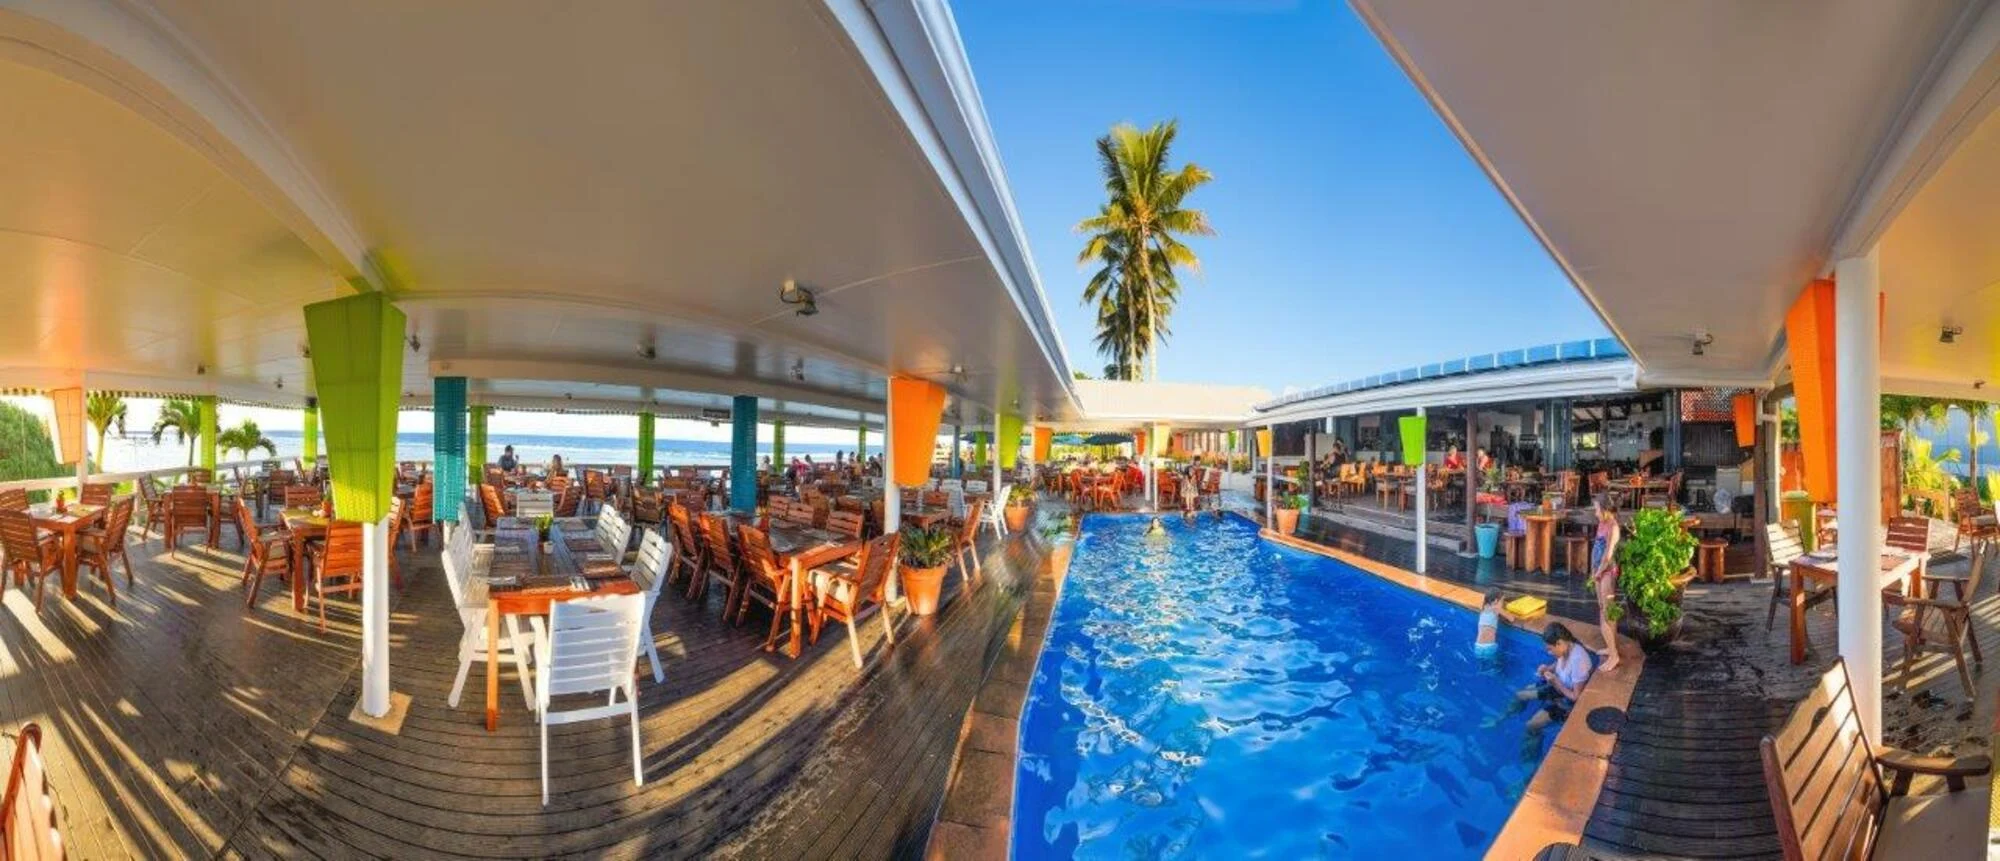 The Islander Restaurant in Cook Islands, Australia and Oceania | SPAs,Restaurants - Rated 3.3